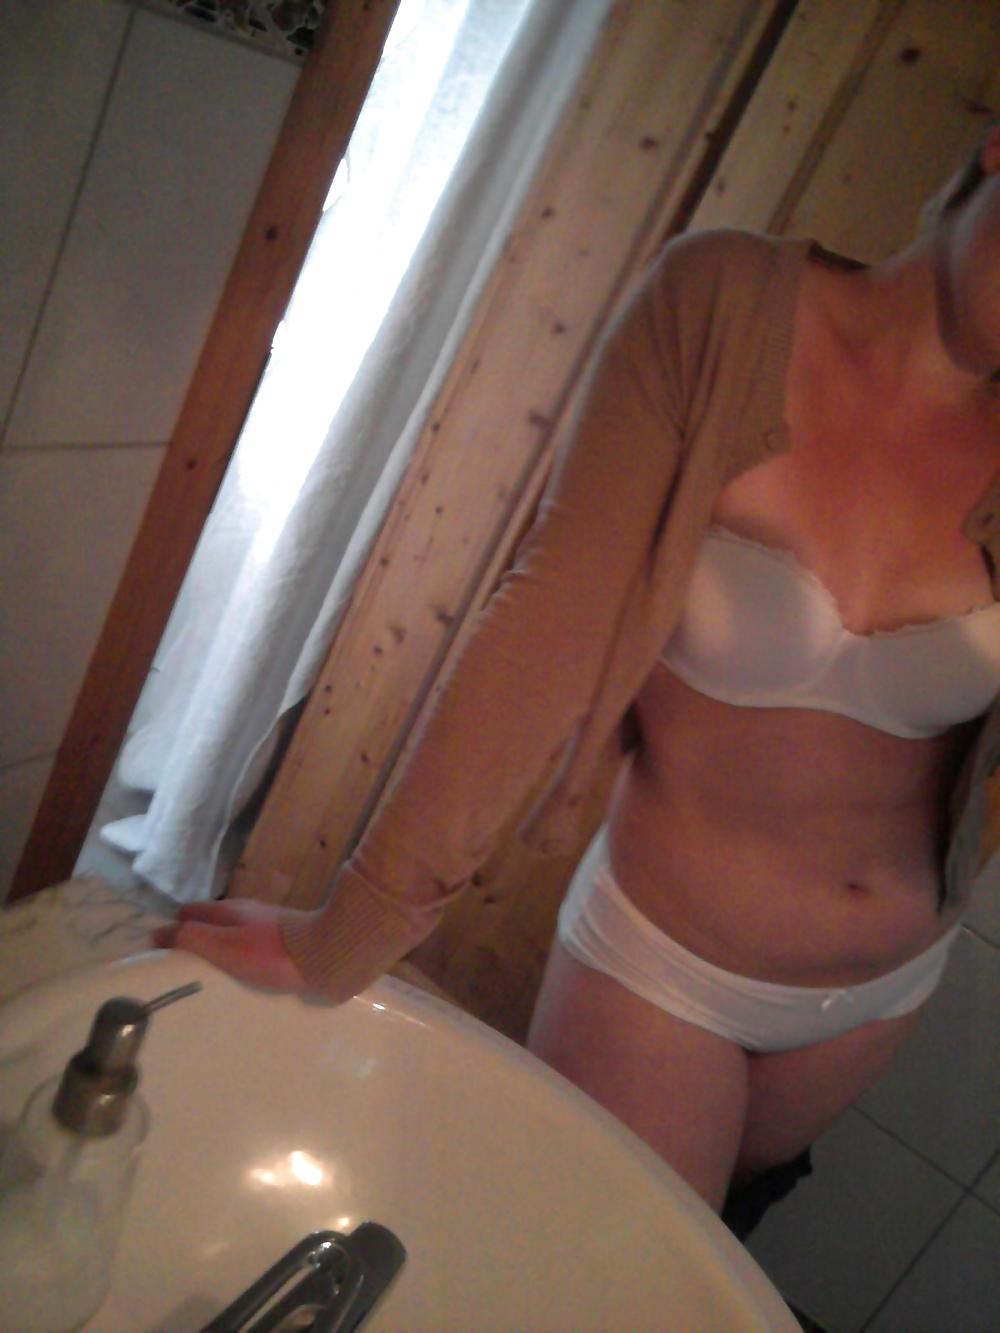 Porn Pics Sexy german amateur homemade ex-girlfriend masturbate Part 2